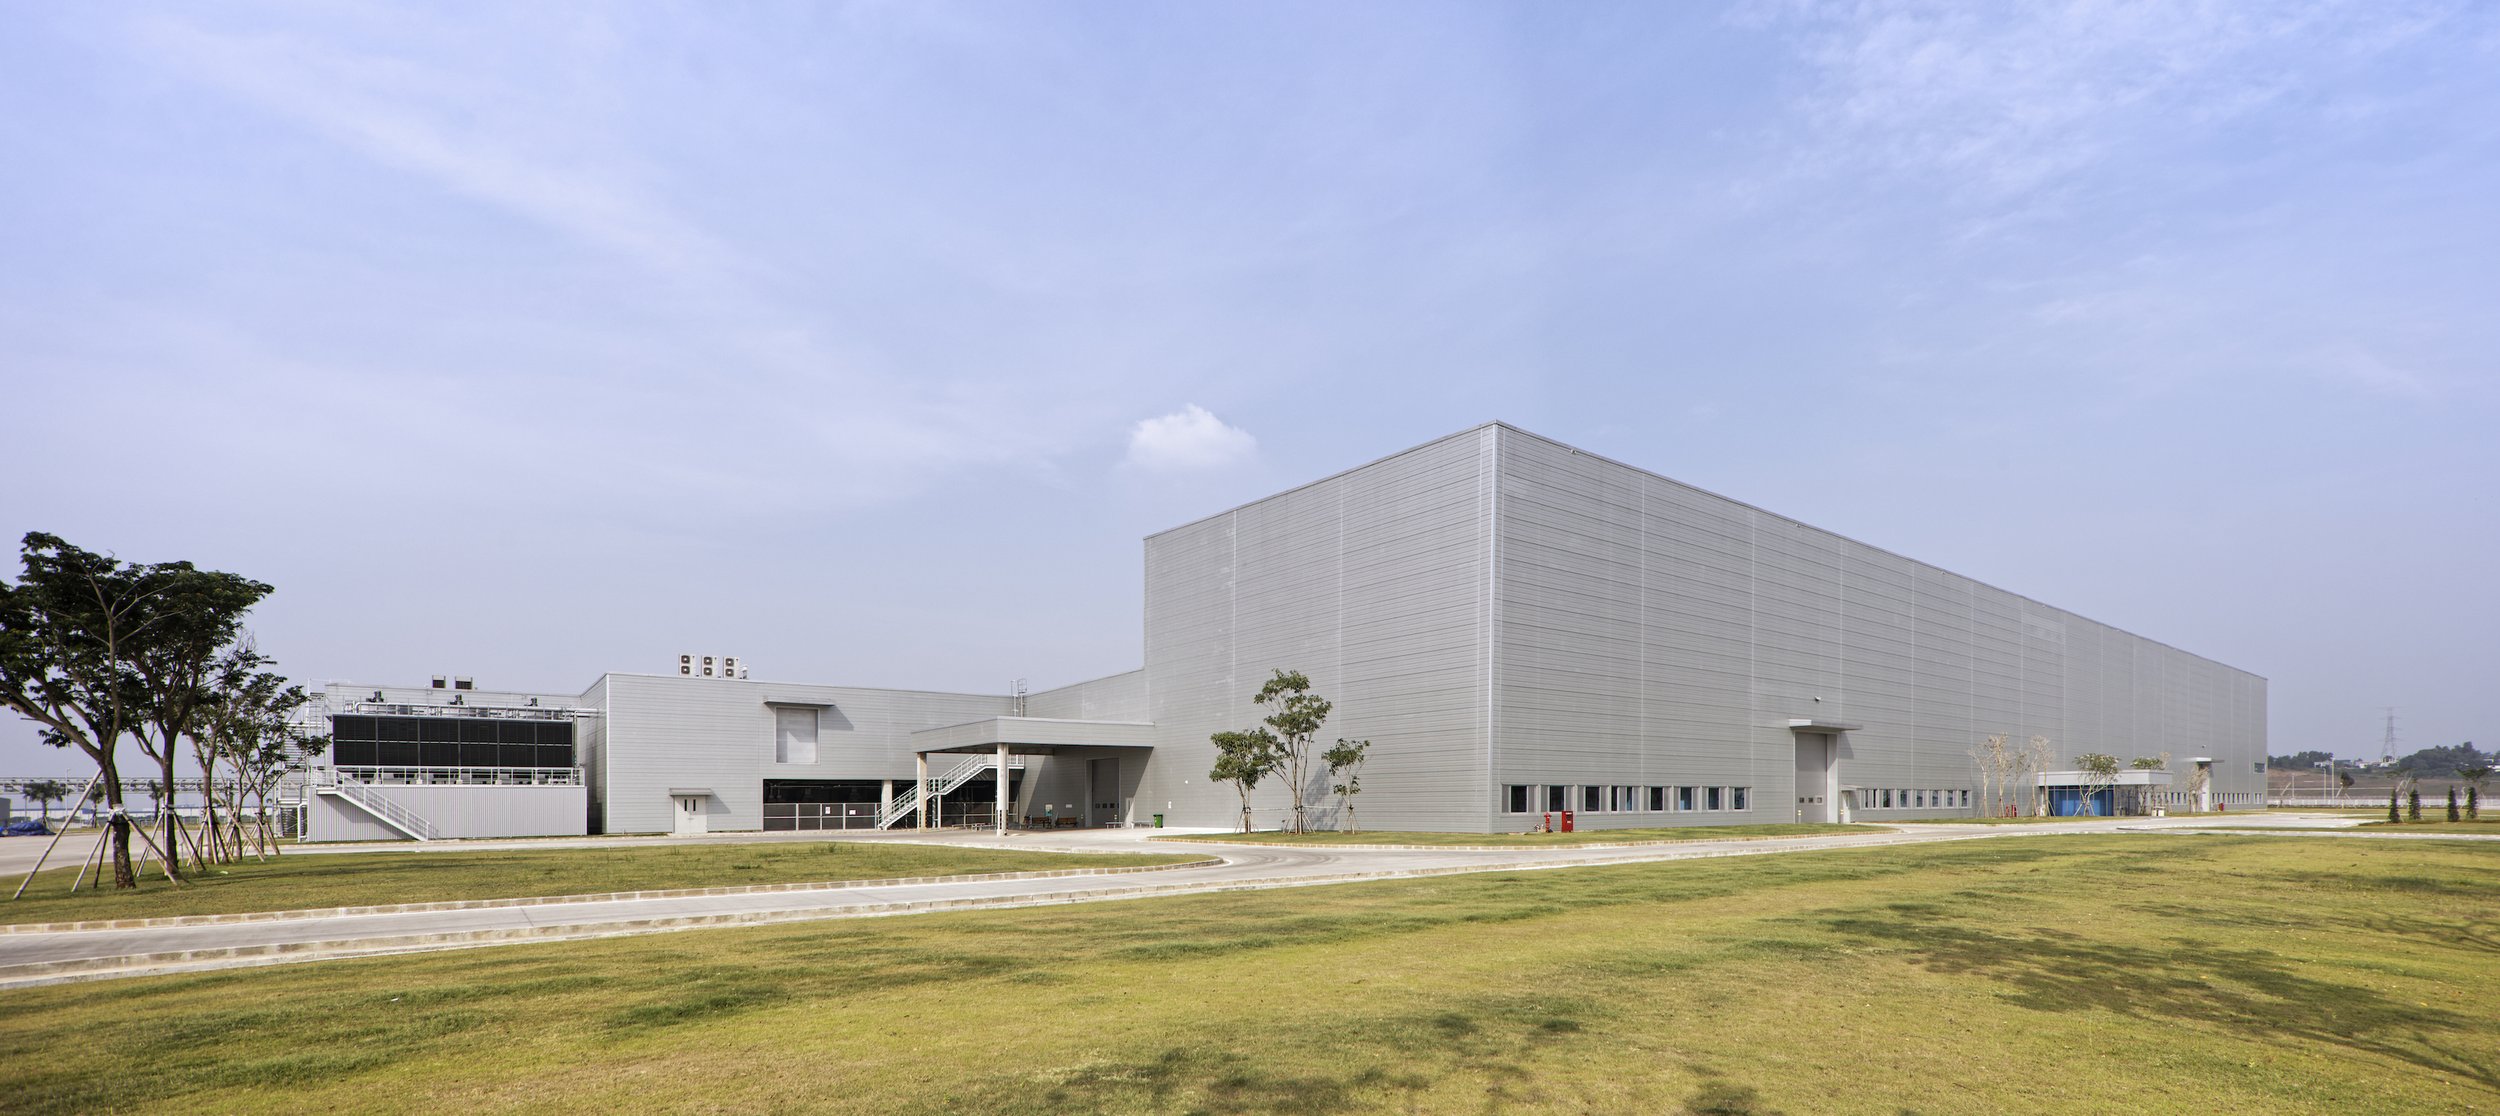 191-Hyundai Factory (TAKENAKA) -29.08__05.09.2021-.jpg